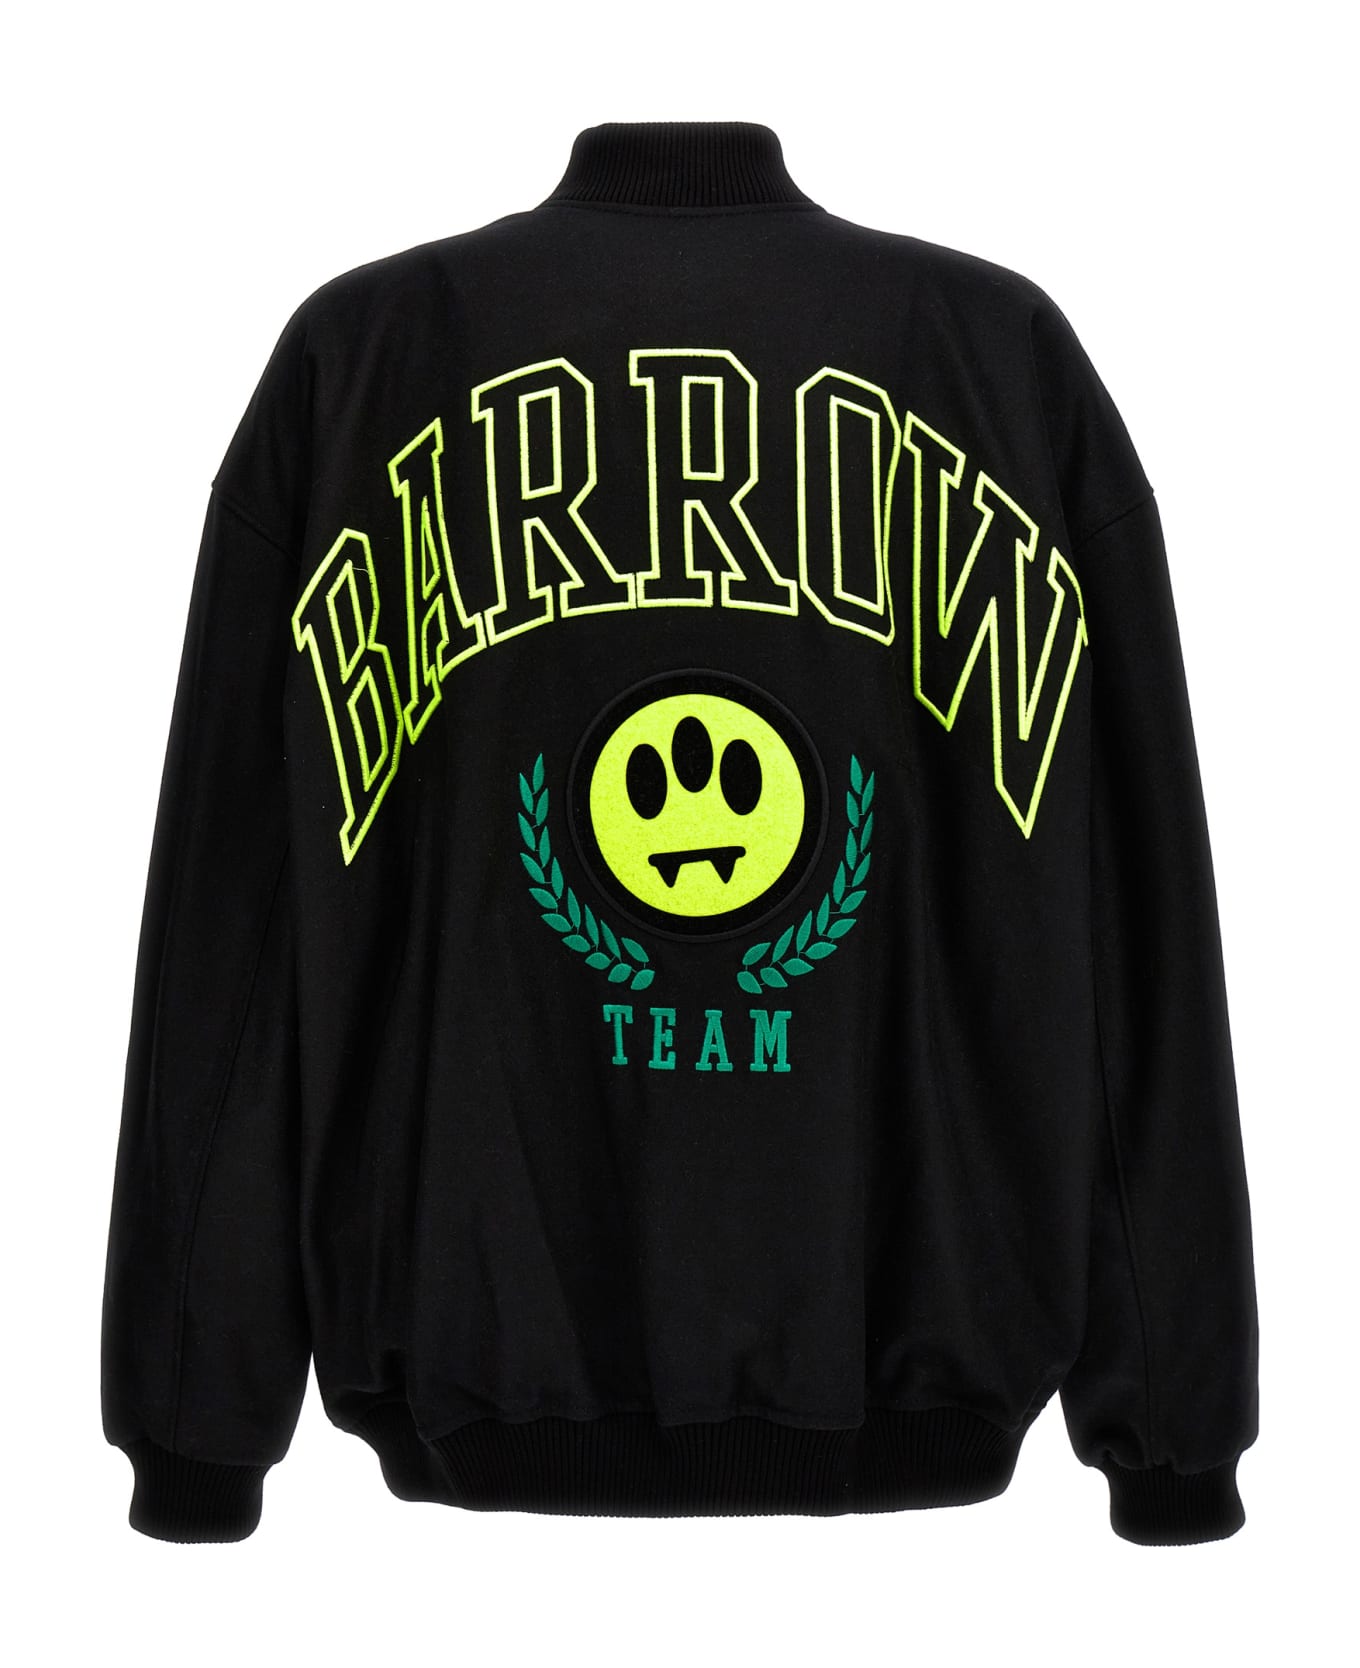 Barrow Black Bomber Jacket With 'barrow Team' Embroidery - Black